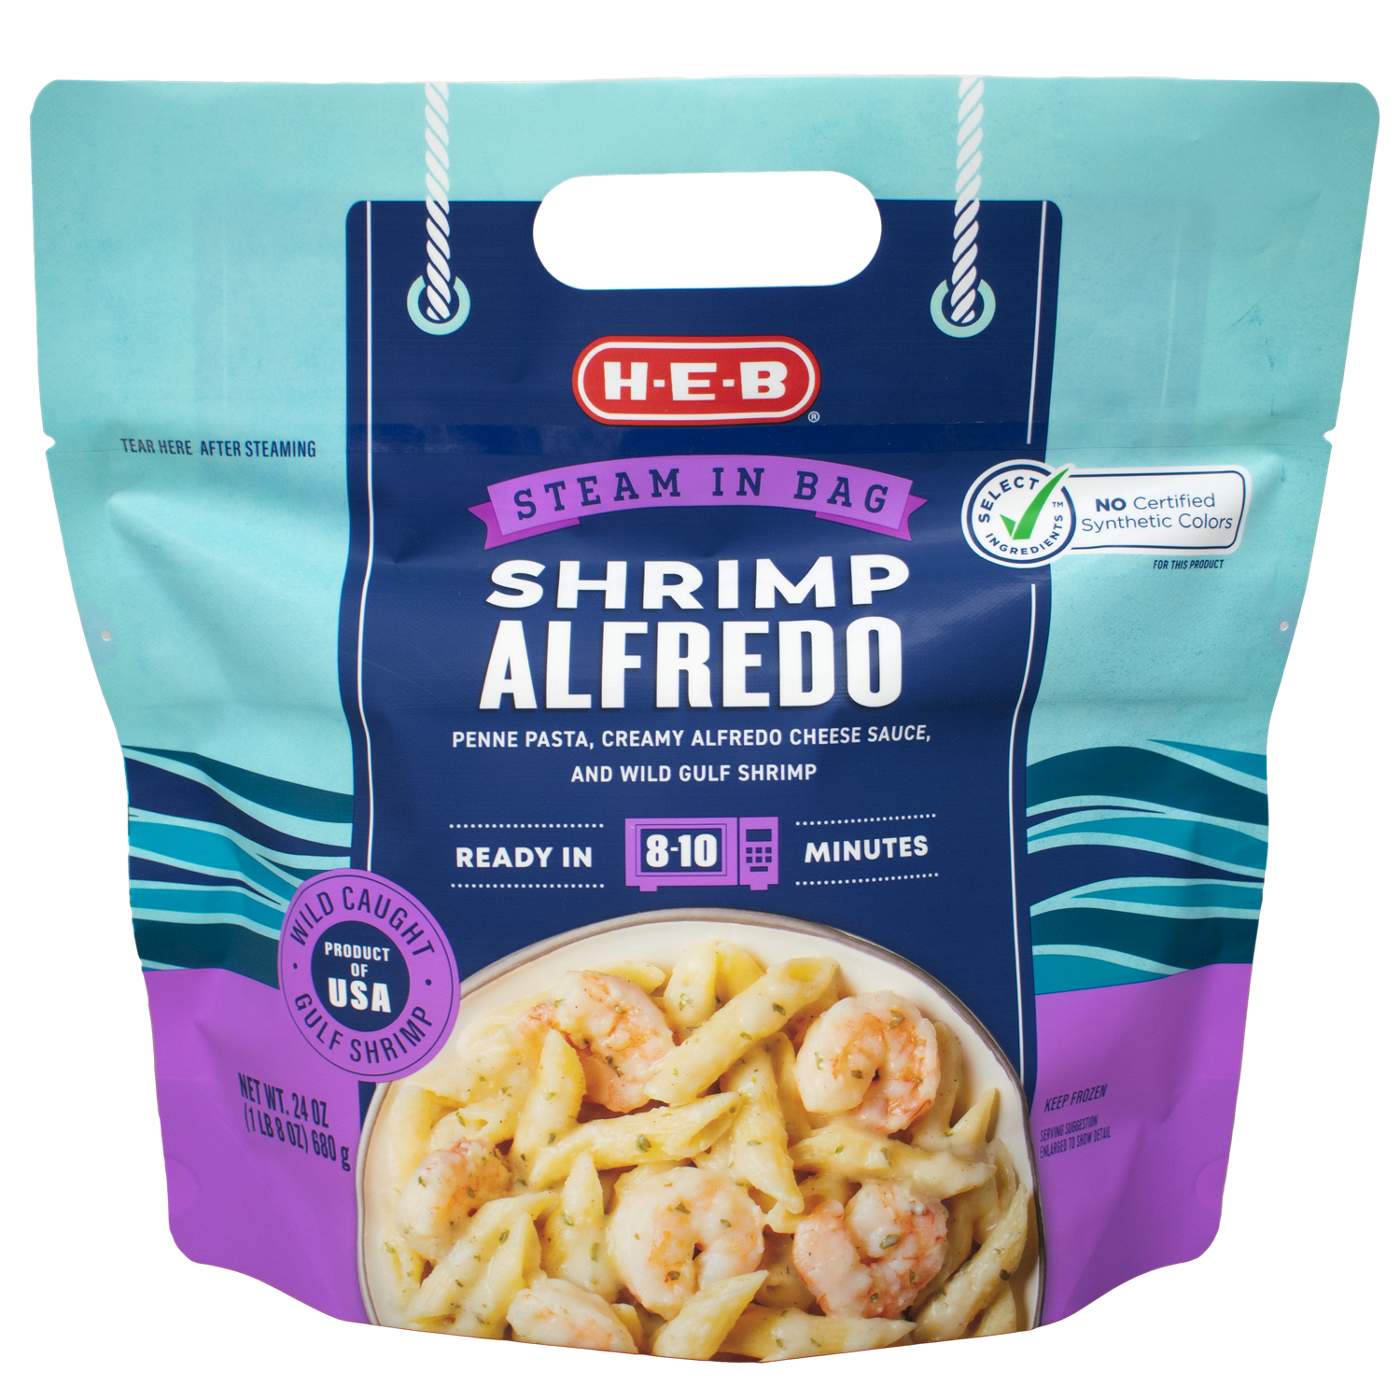 H-E-B Frozen Steamable Shrimp Alfredo; image 1 of 2